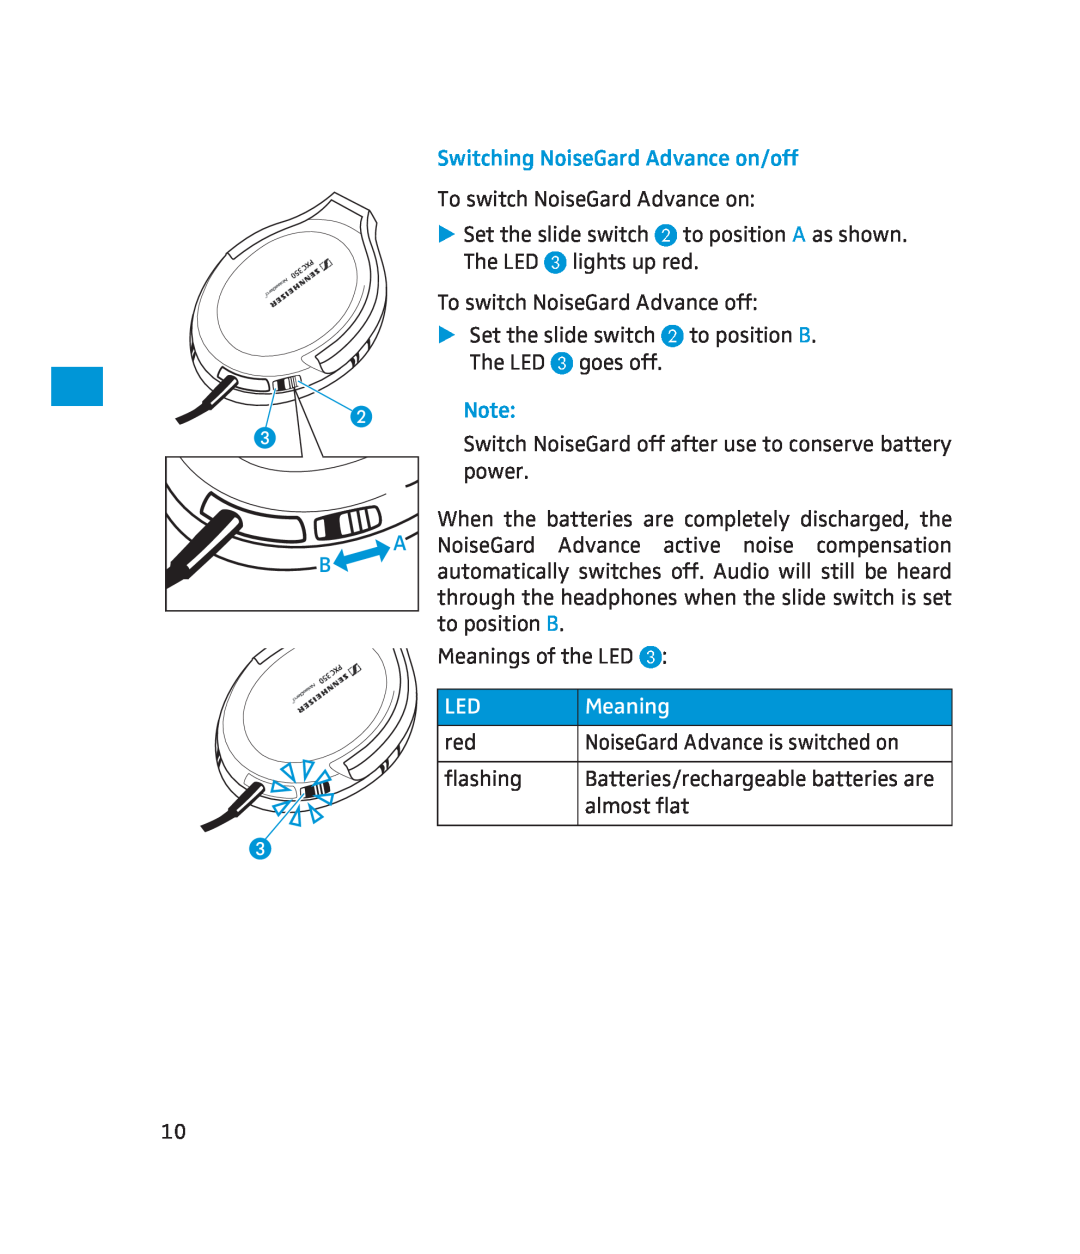 Sennheiser 500371 instruction manual Switching NoiseGard Advance on/off, To switch NoiseGard Advance on, Meaning 